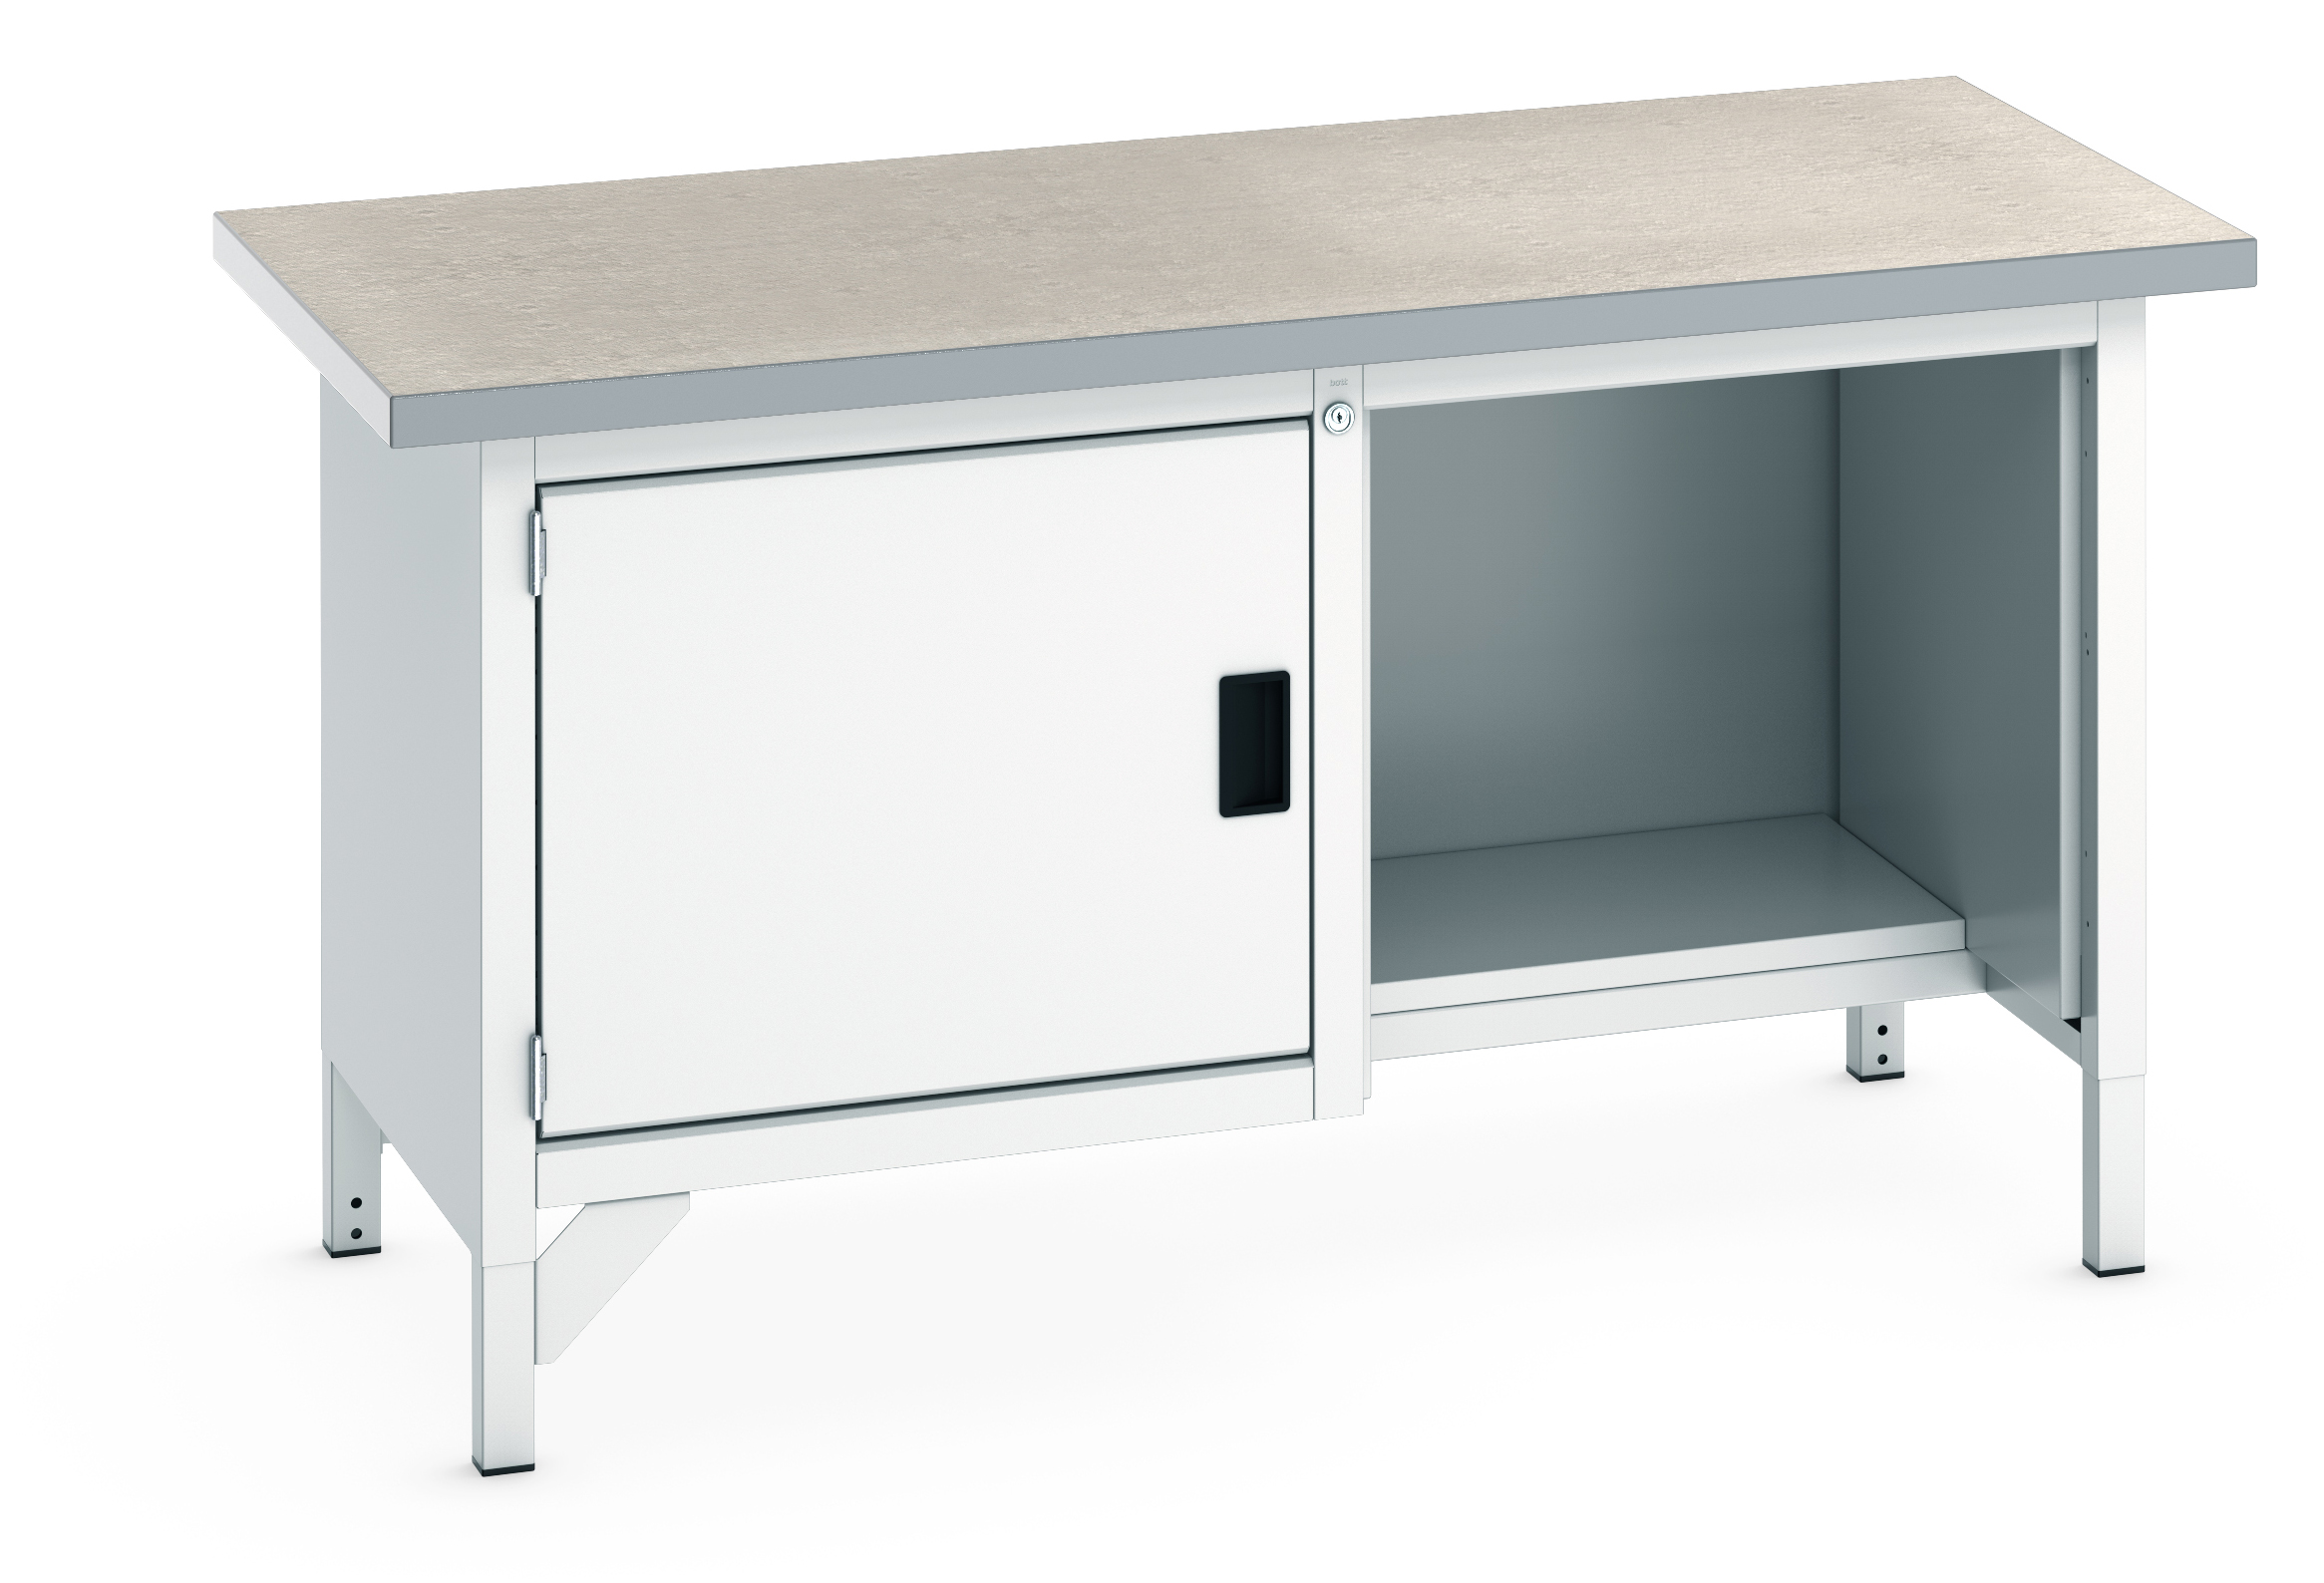 Bott Cubio Storage Bench With Full Cupboard / Open With Half Depth Base Shelf - 41002036.16V